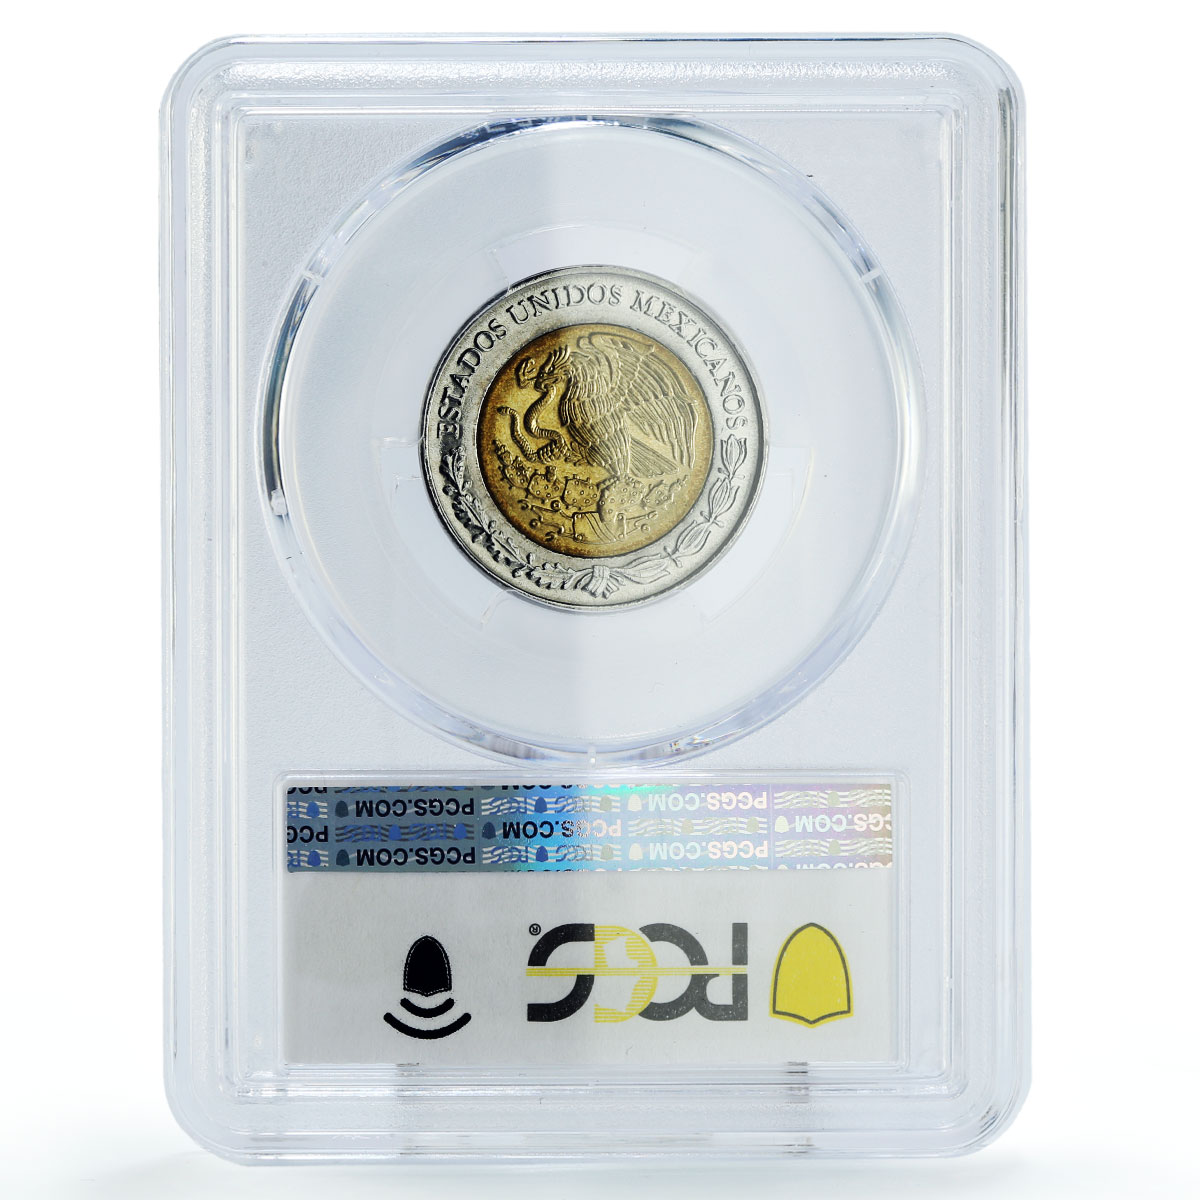 Mexico 5 pesos Francisco Primo Verdad Ramos No Dots MS67 PCGS bimetal coin 2008